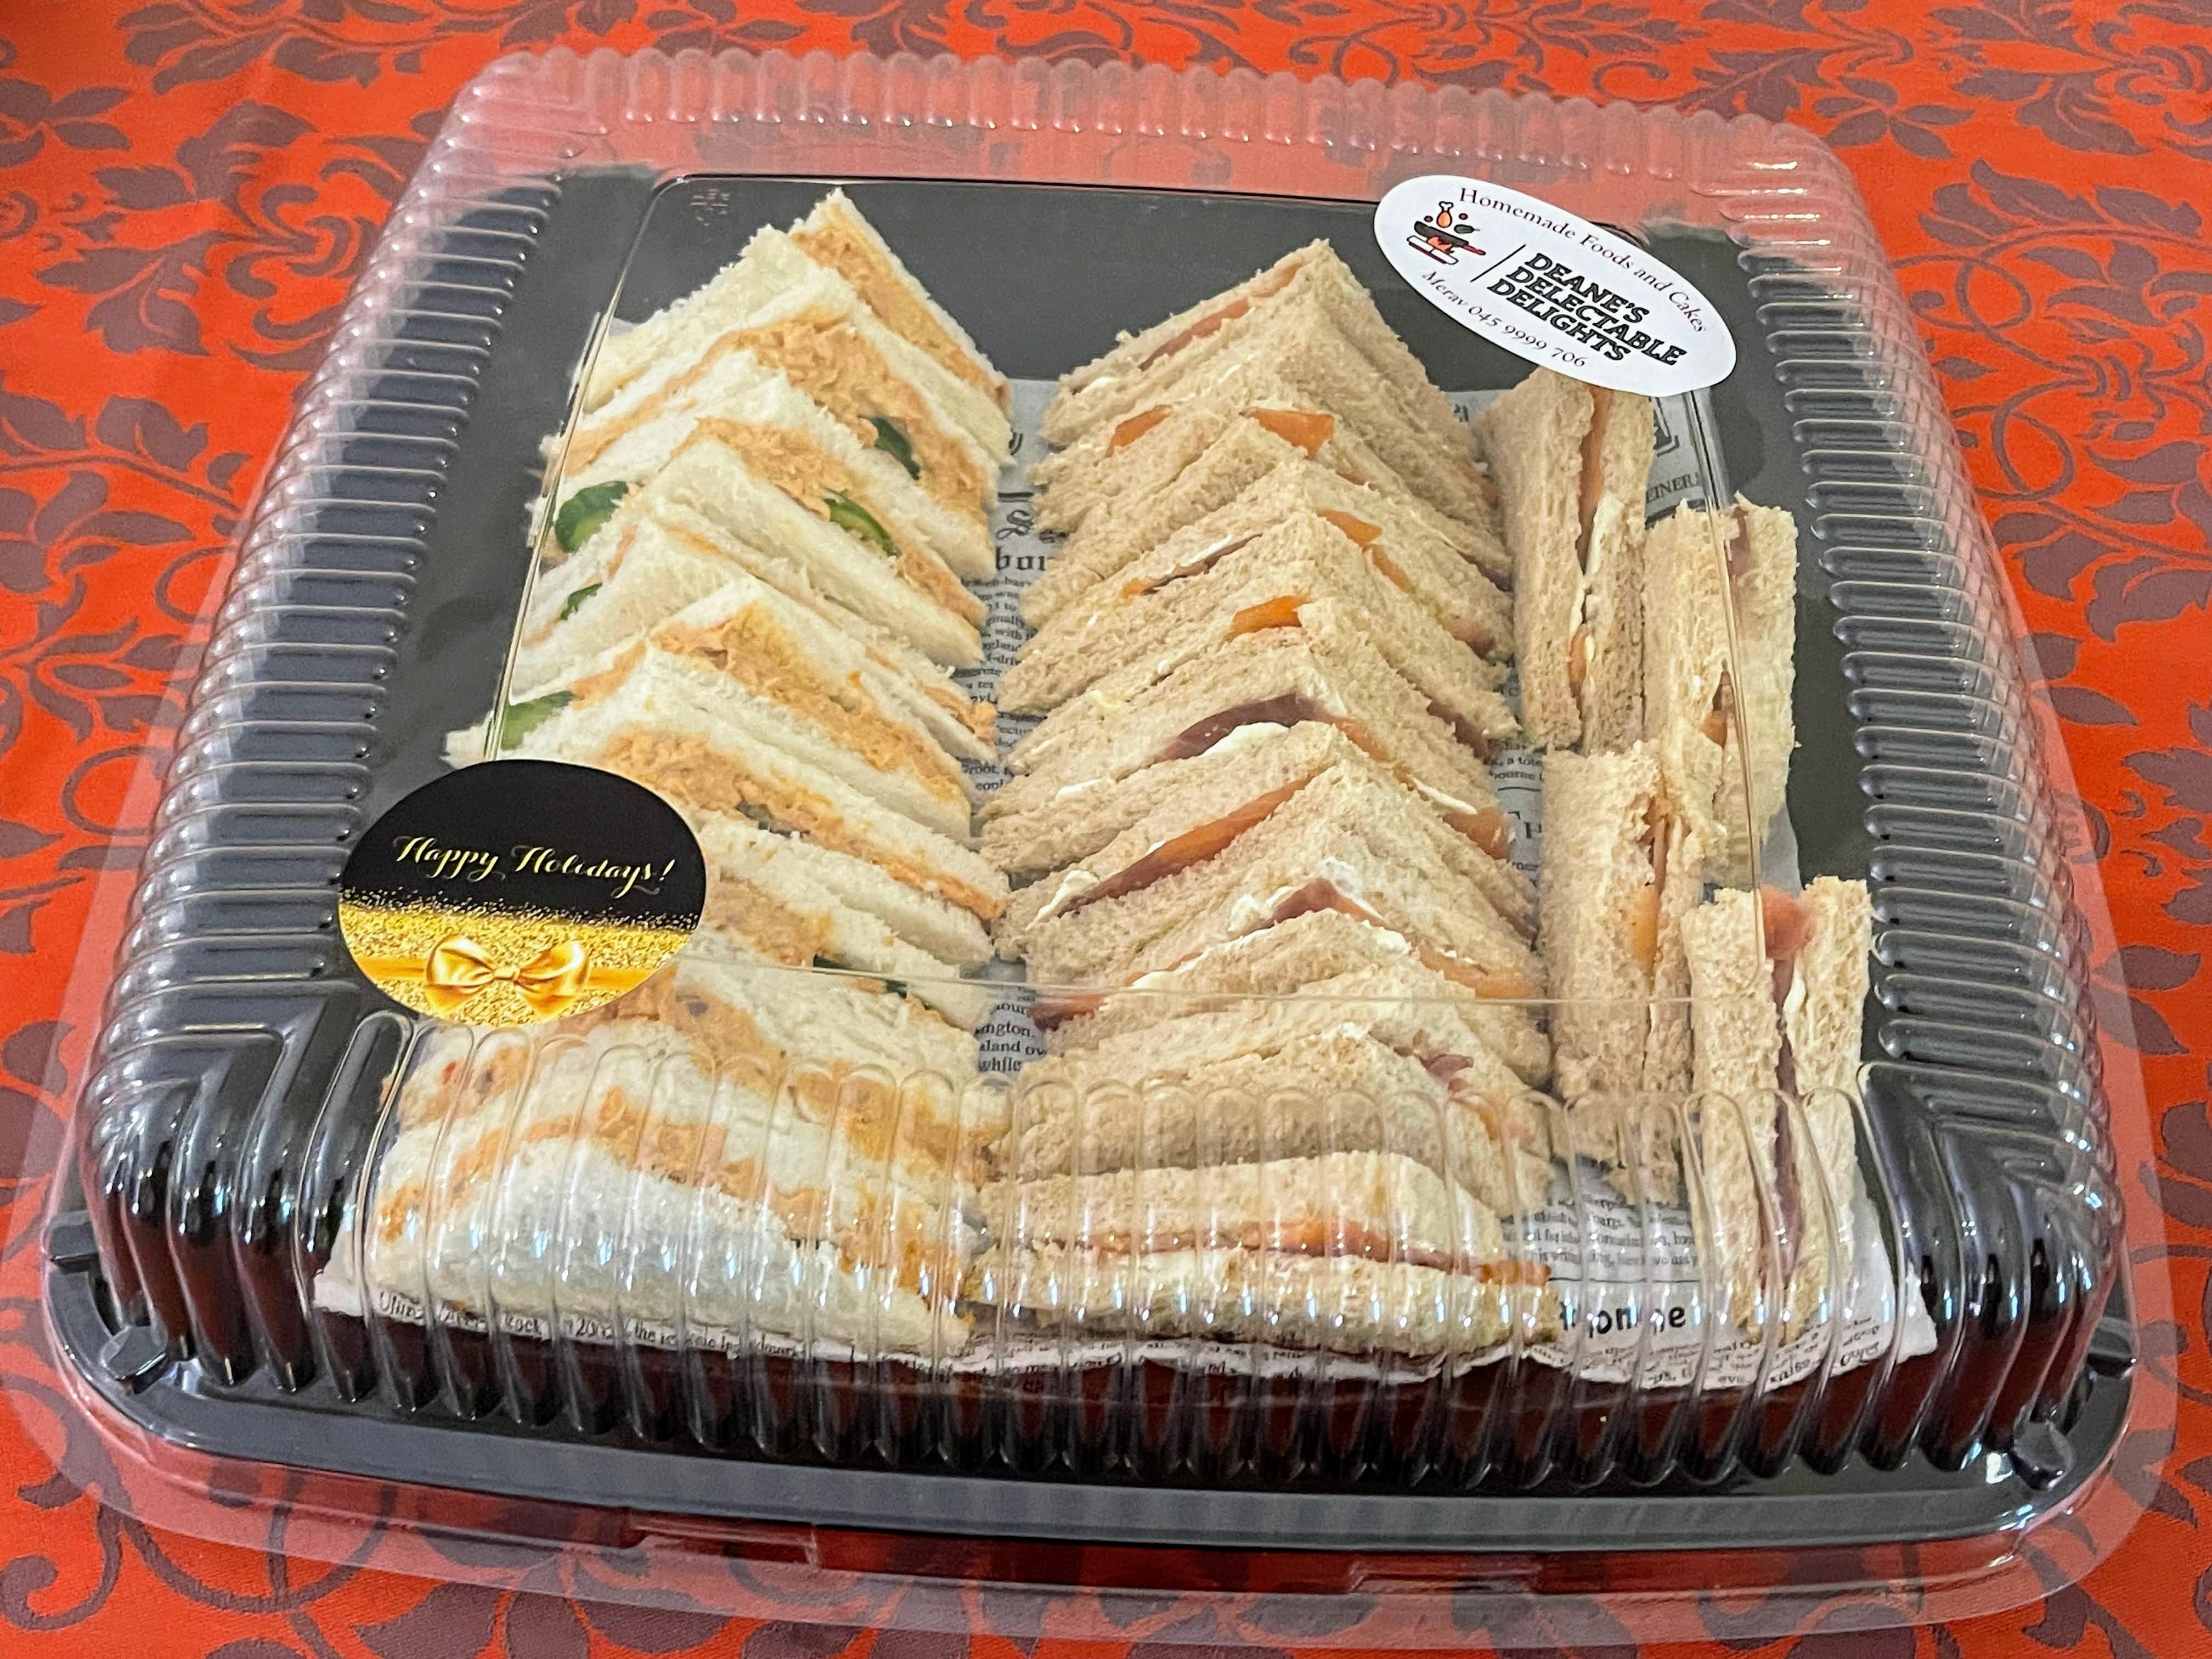 Club sandwich catering platter